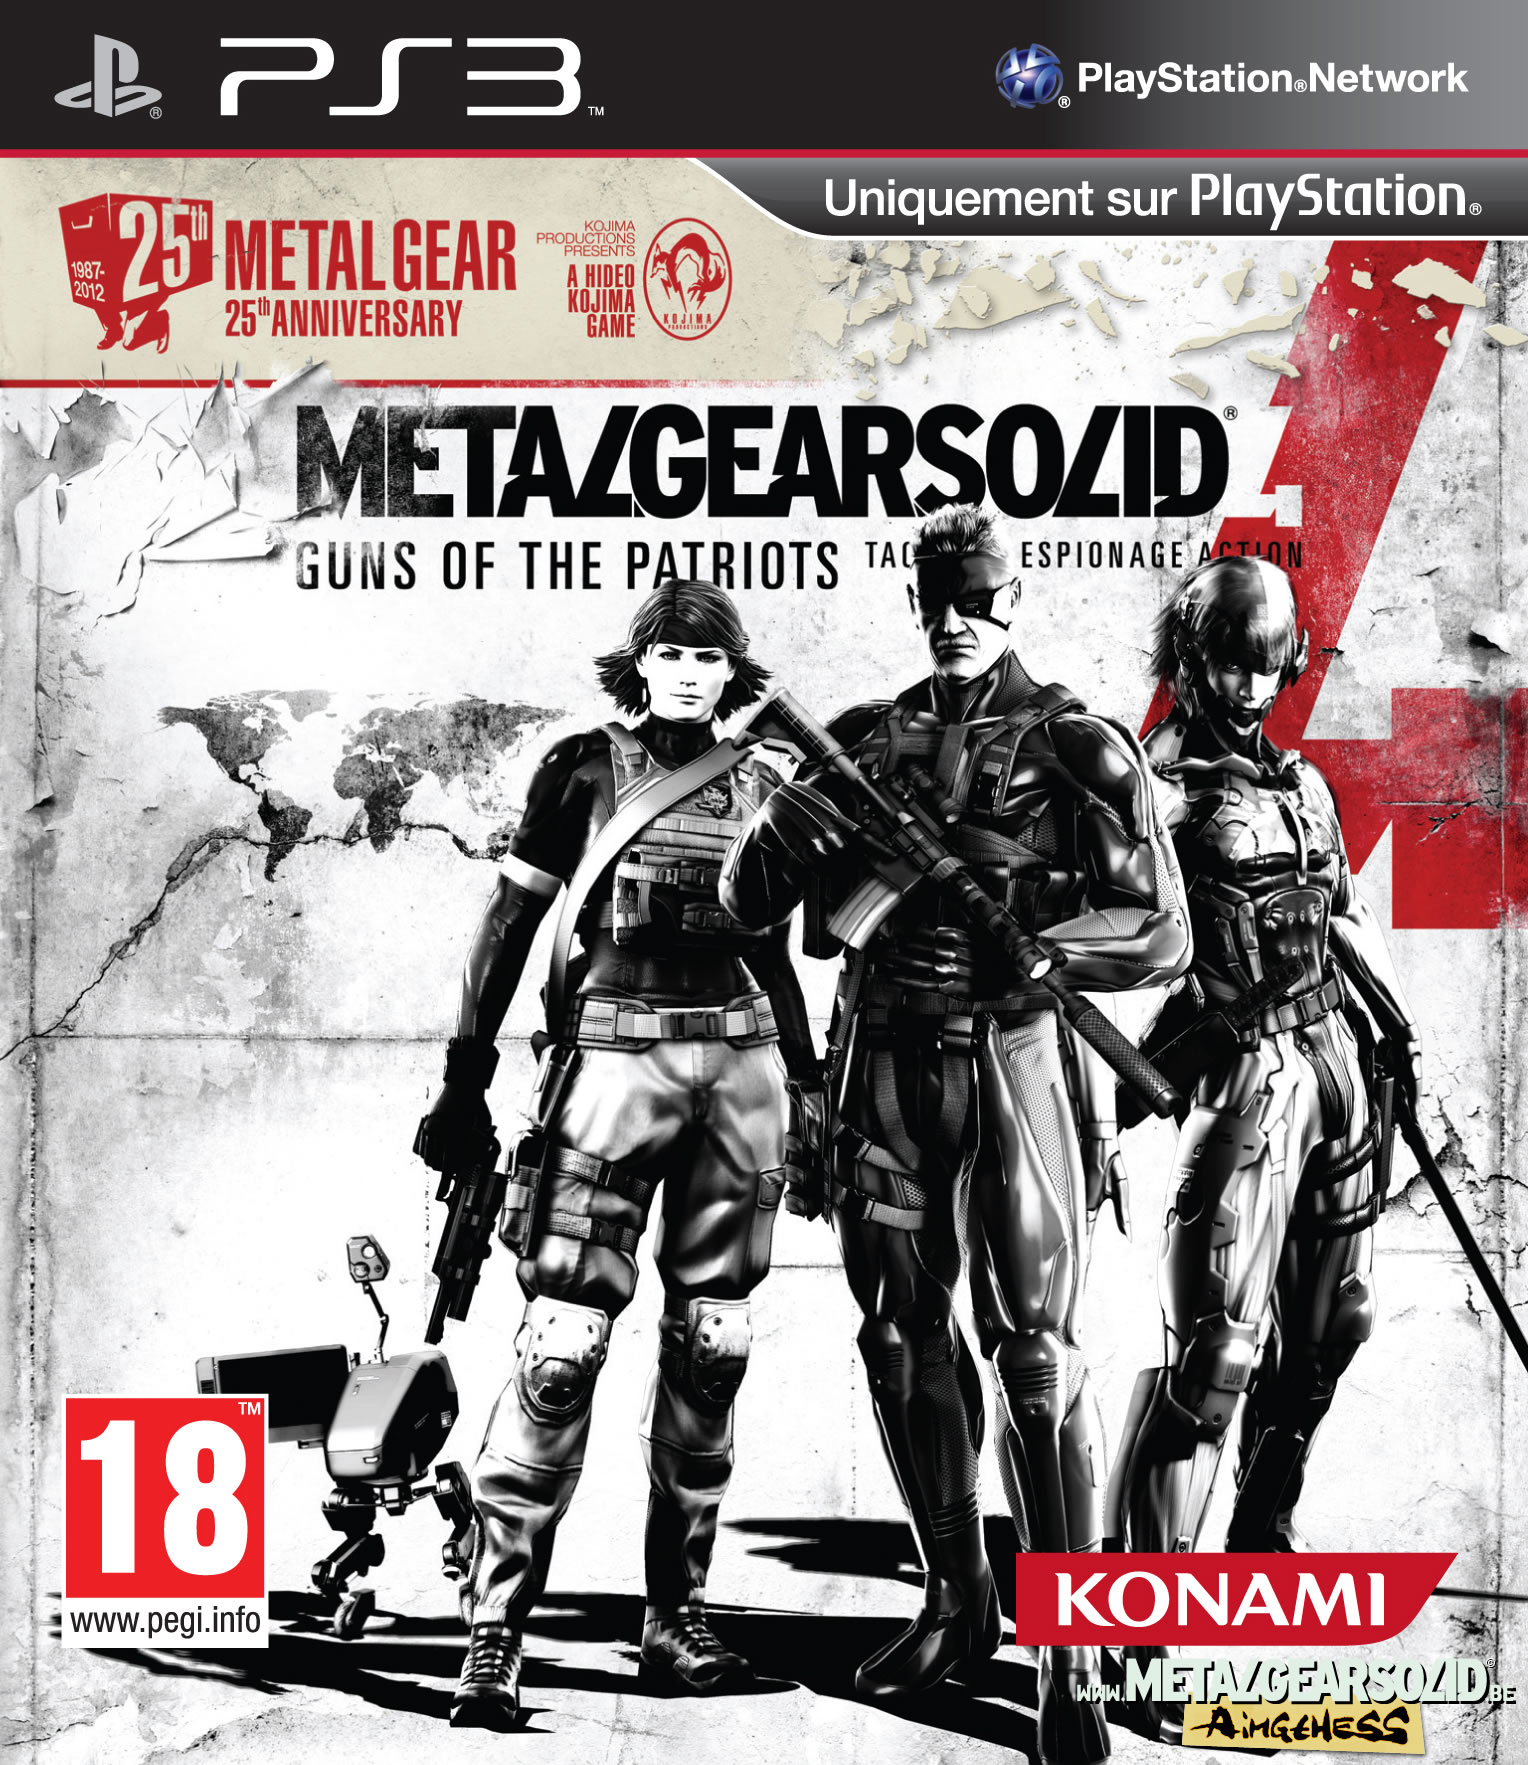 Edition 25 ans de Metal Gear Solid 4 Guns of the Patriots